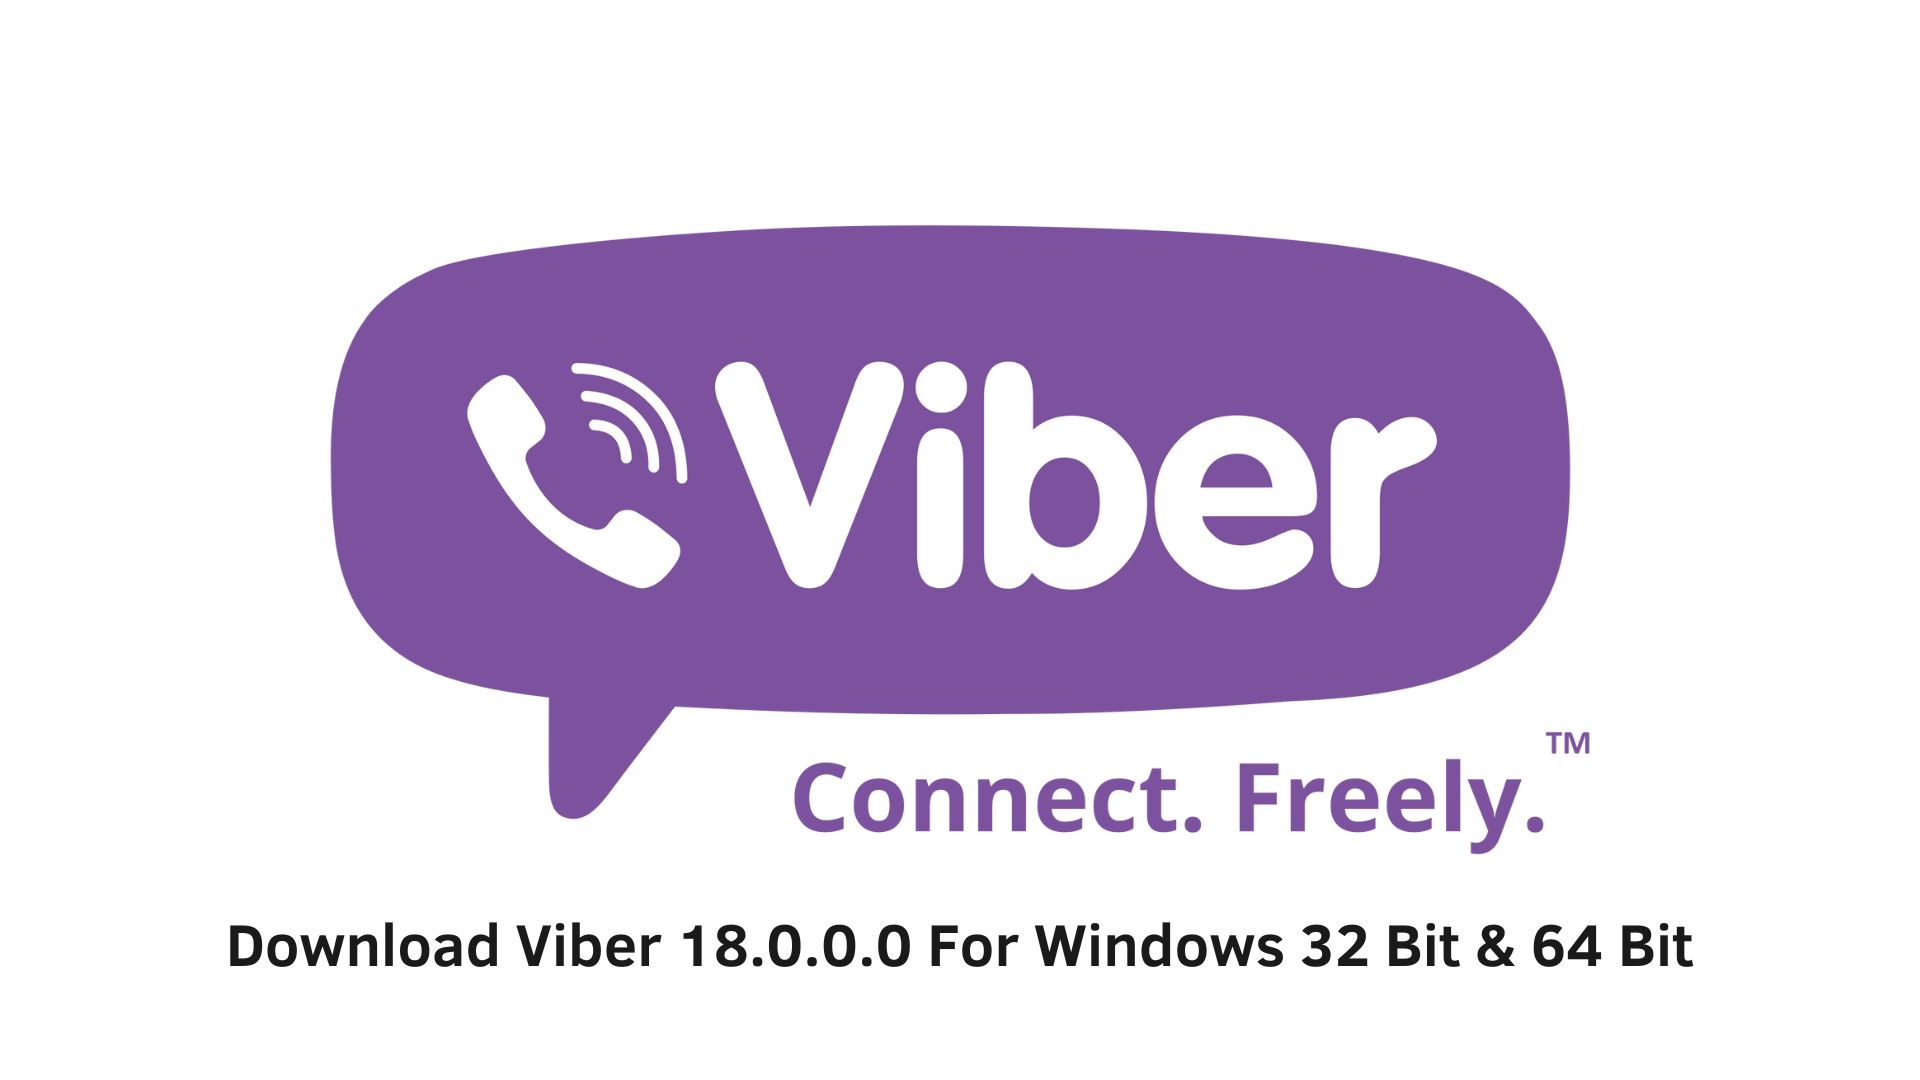 Viber info. Ayber. Viber. Логотип вибер. Ярлык вайбер.